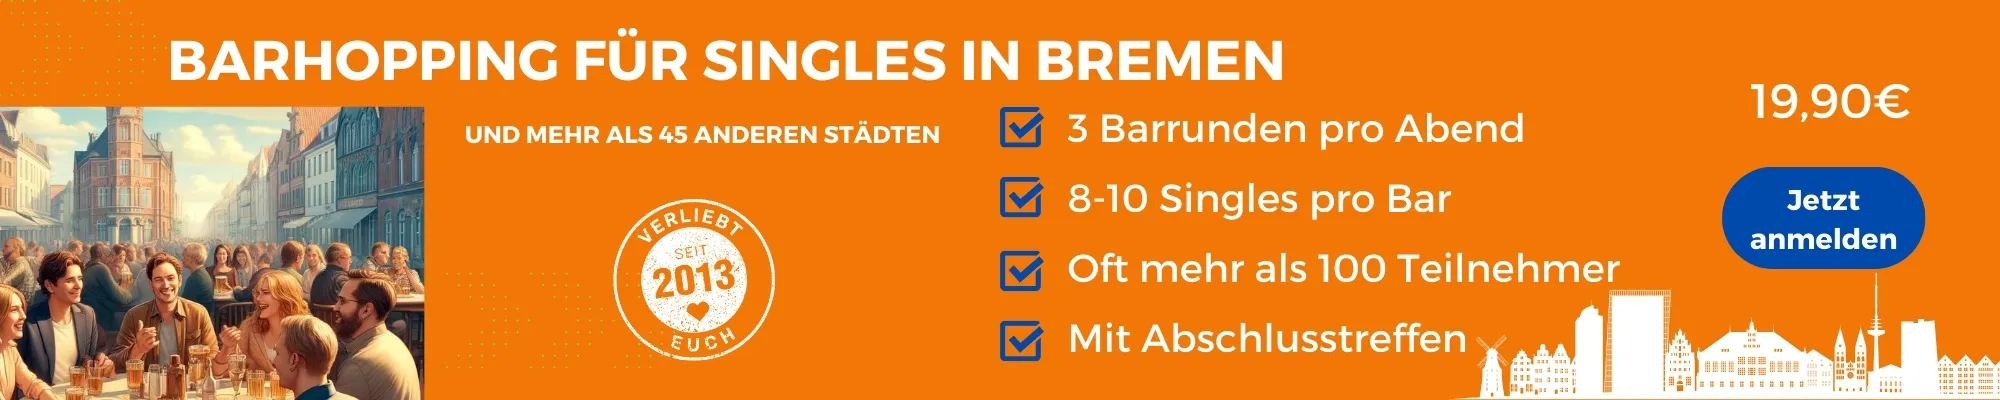 Face to Face Bremen: Barhopping für Singles in Bremen